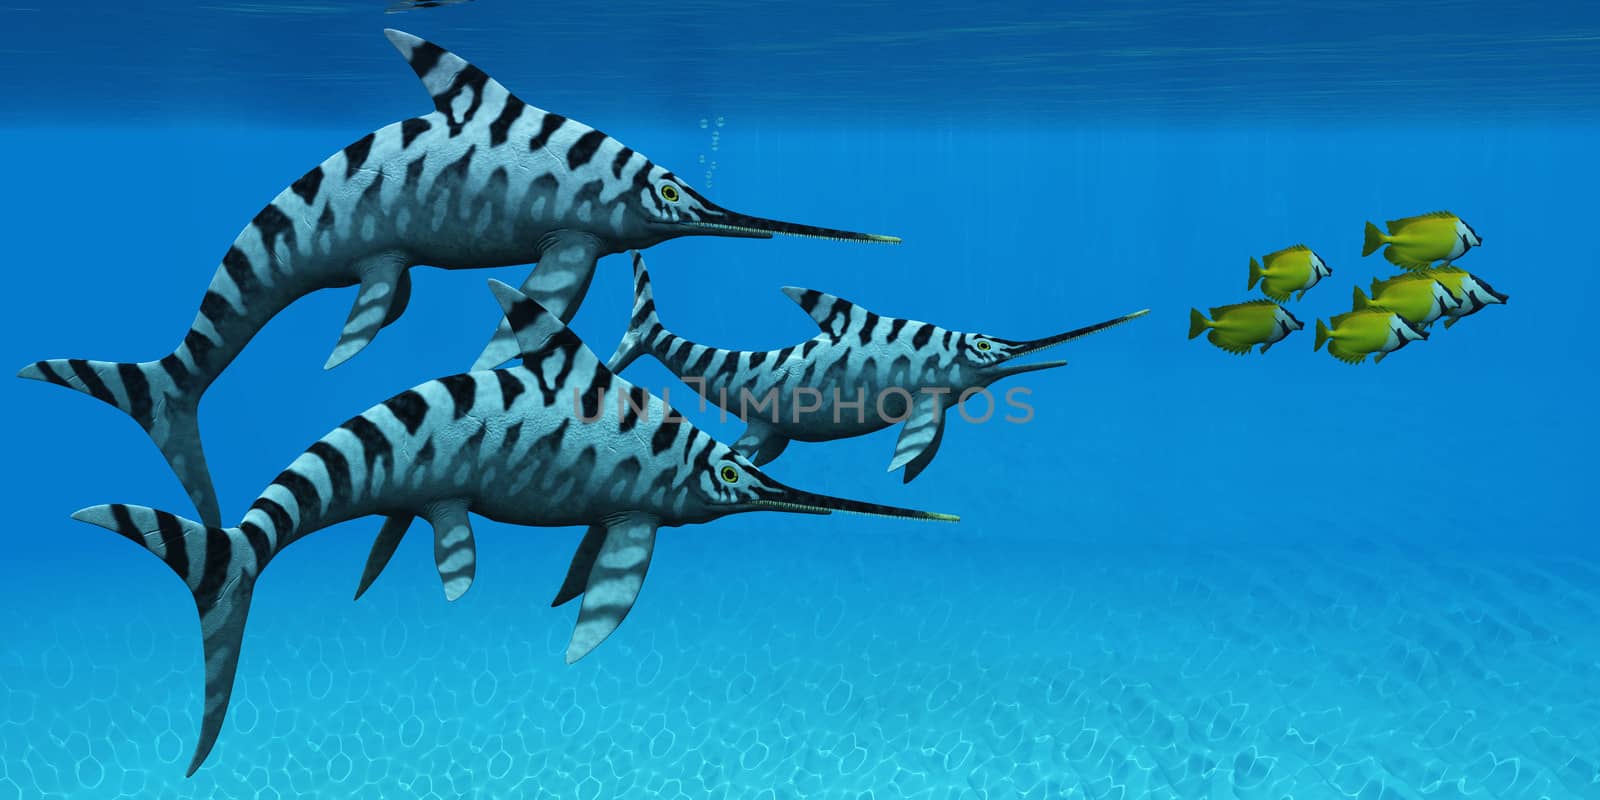 Eurhinosaurus was a fast swimming marine reptile Ichthyosaur from the Jurassic Era of Europe.